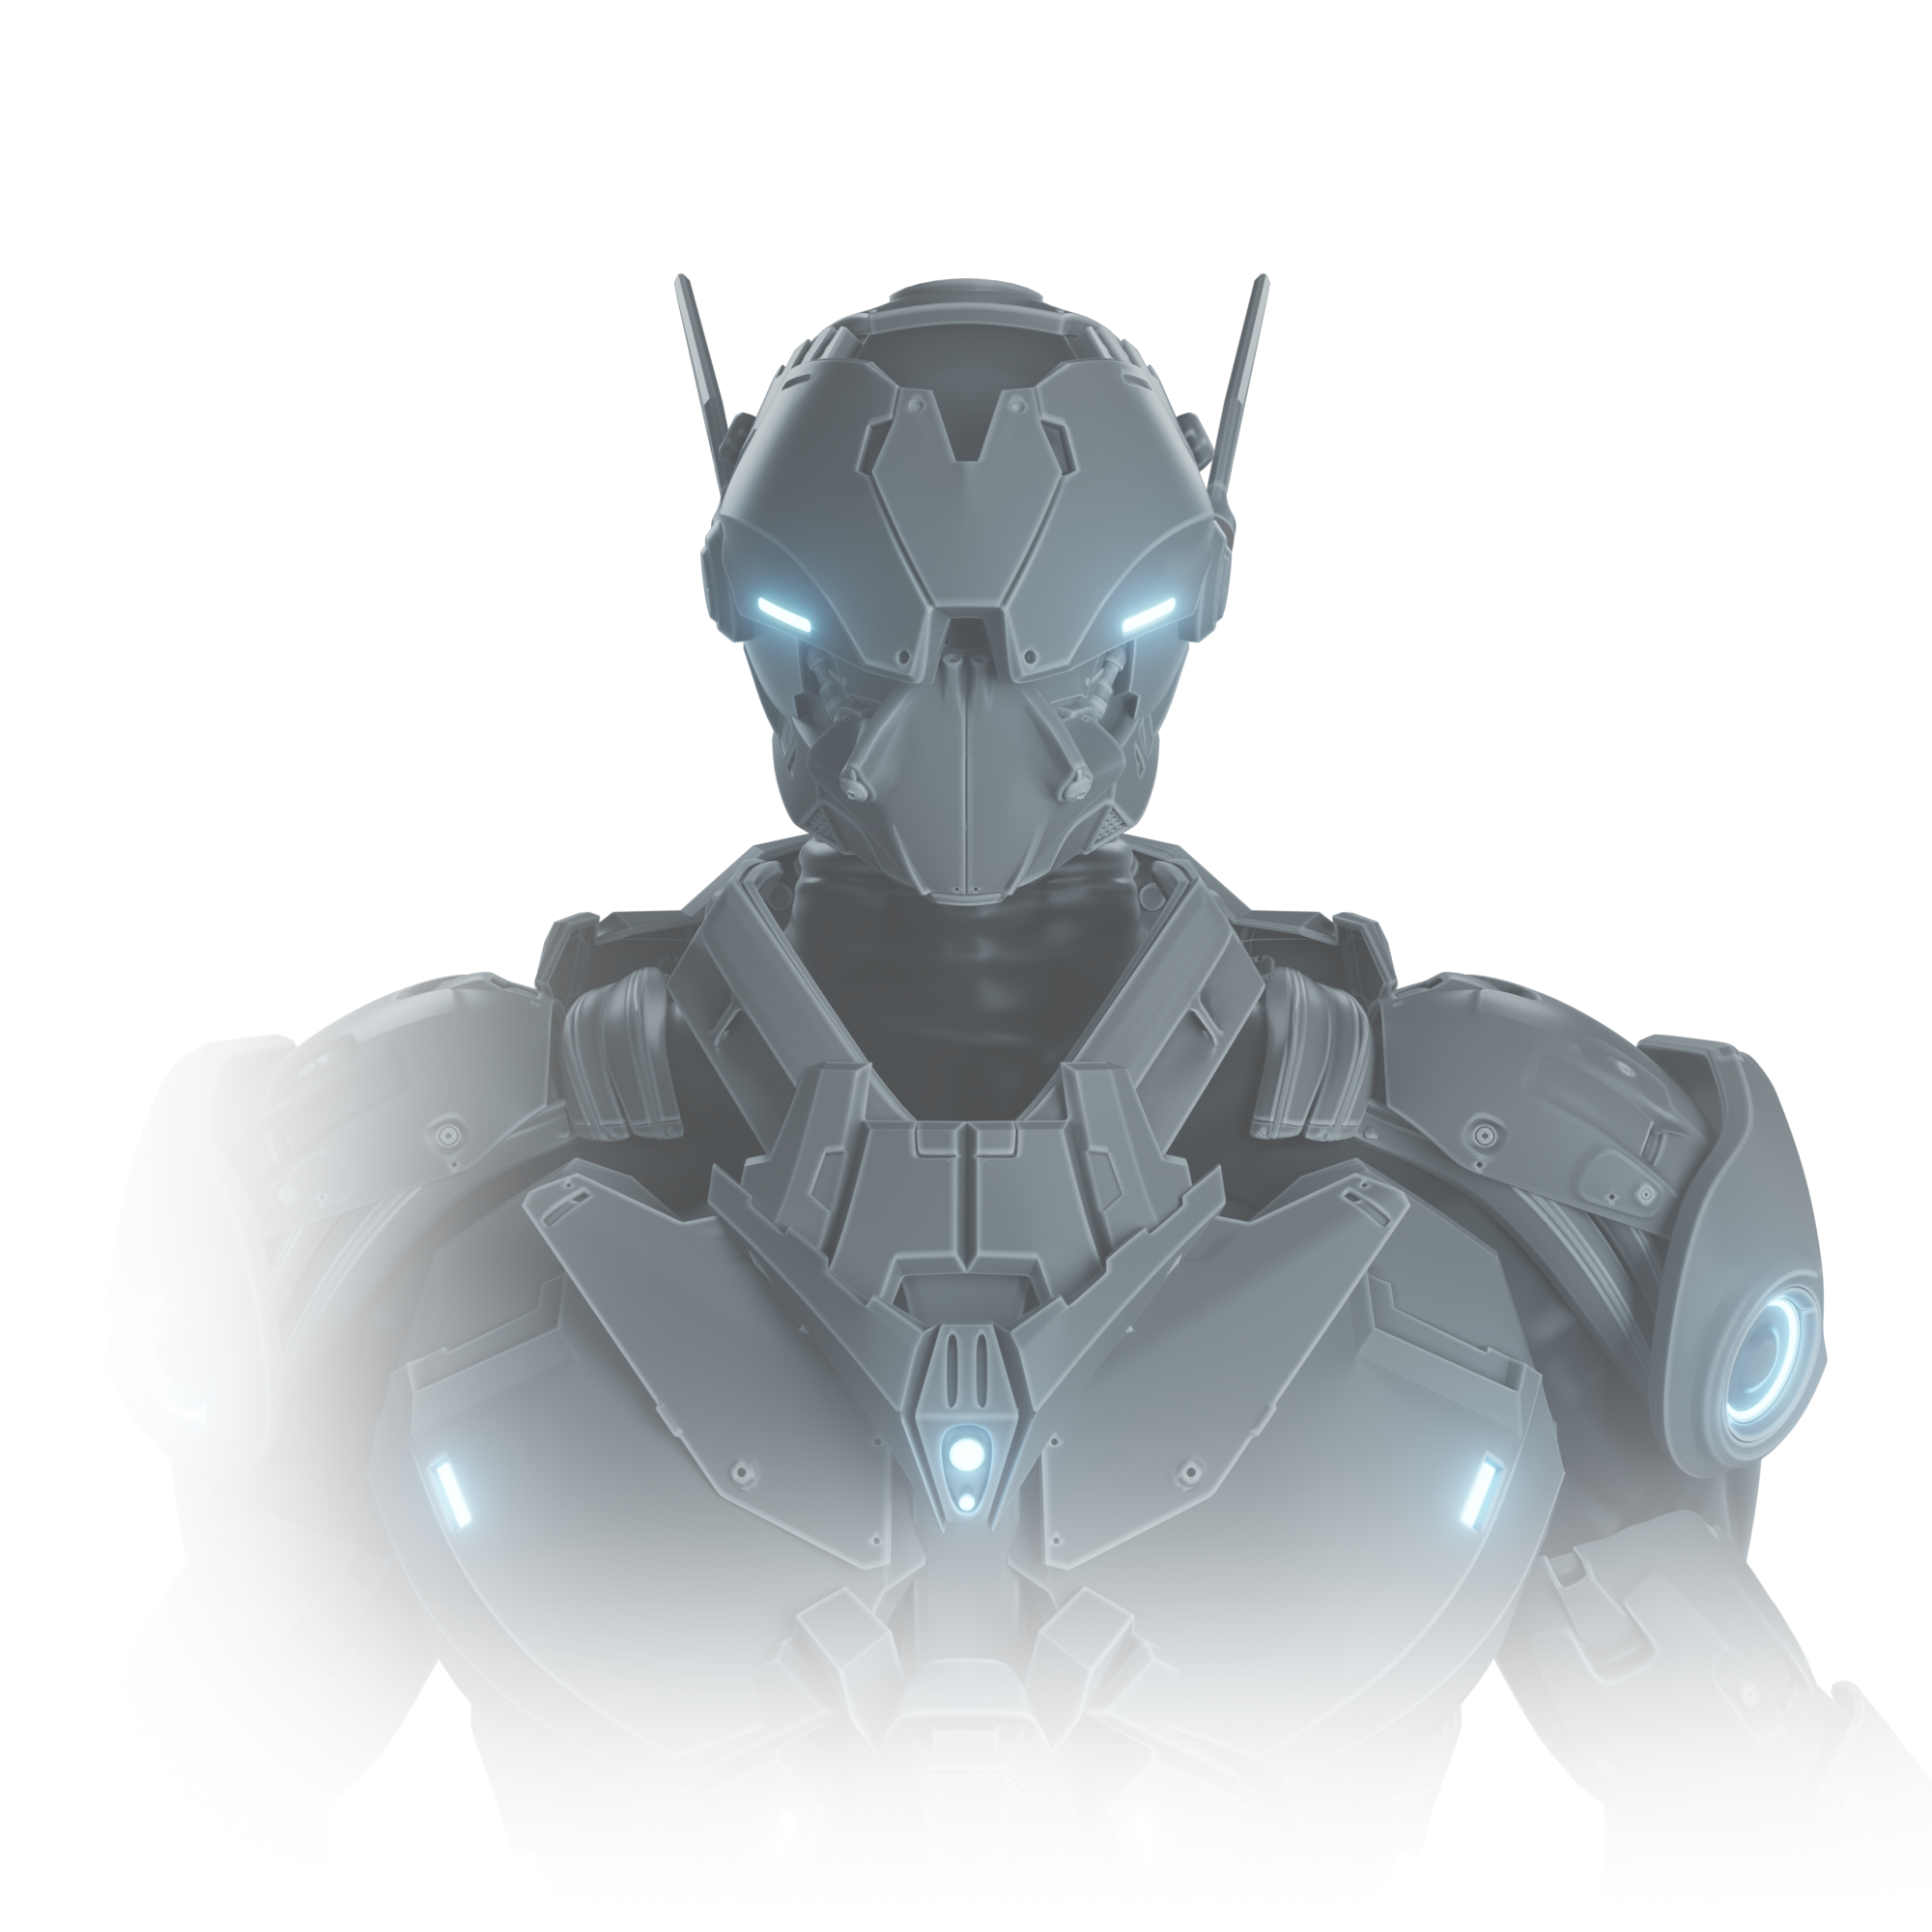 the armors transparent black